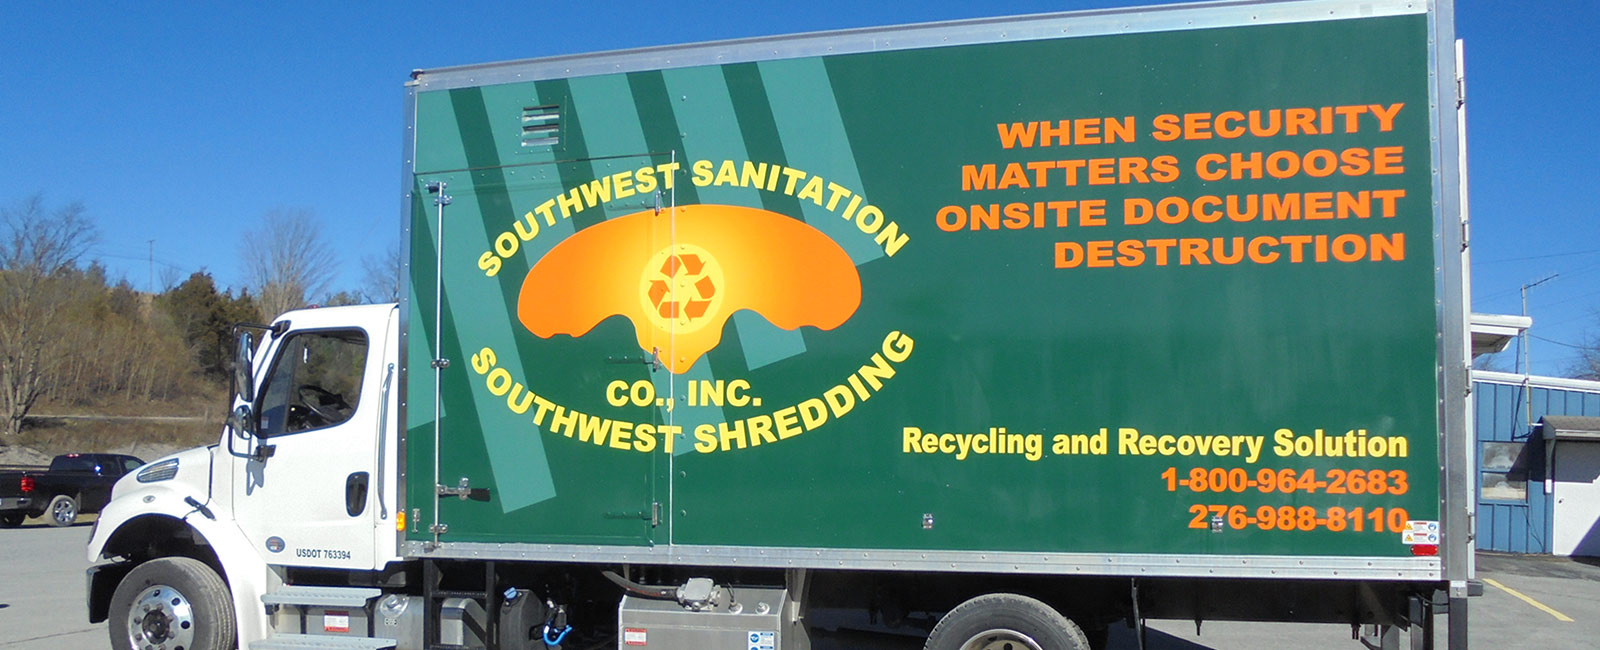 Southwest Sanitation & Shredding side view of truck